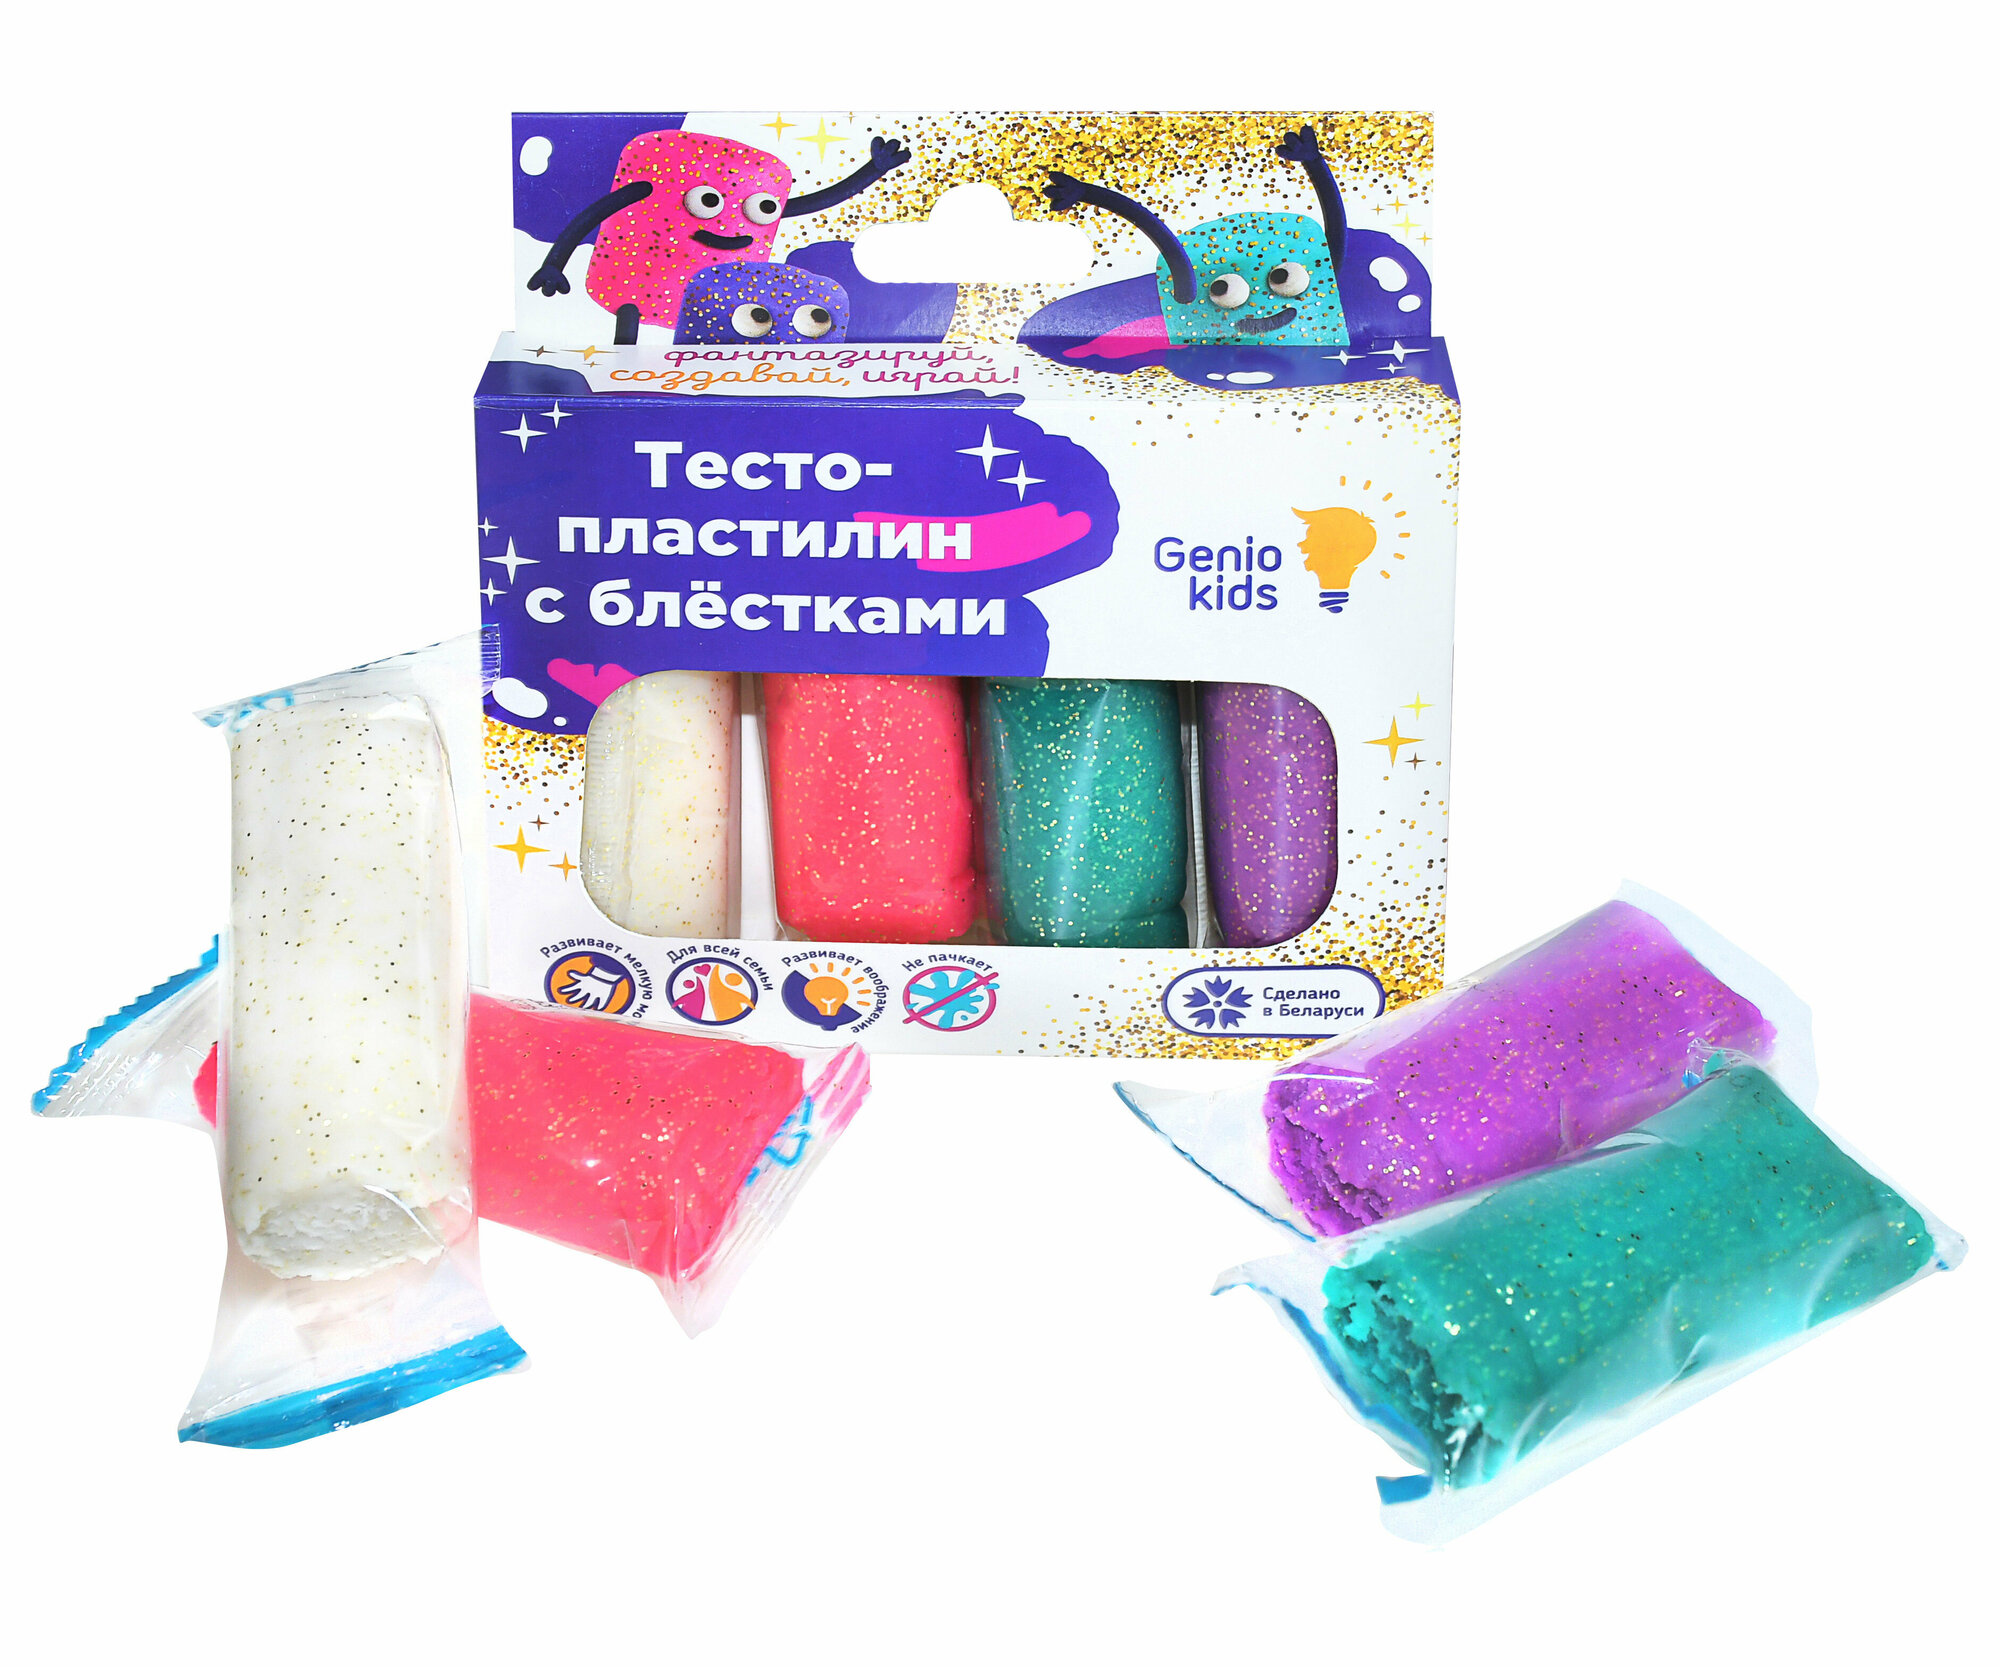 Набор для детской лепки Genio Kids "Тесто-пластилин", с блестками, 4 цвета - фото №6